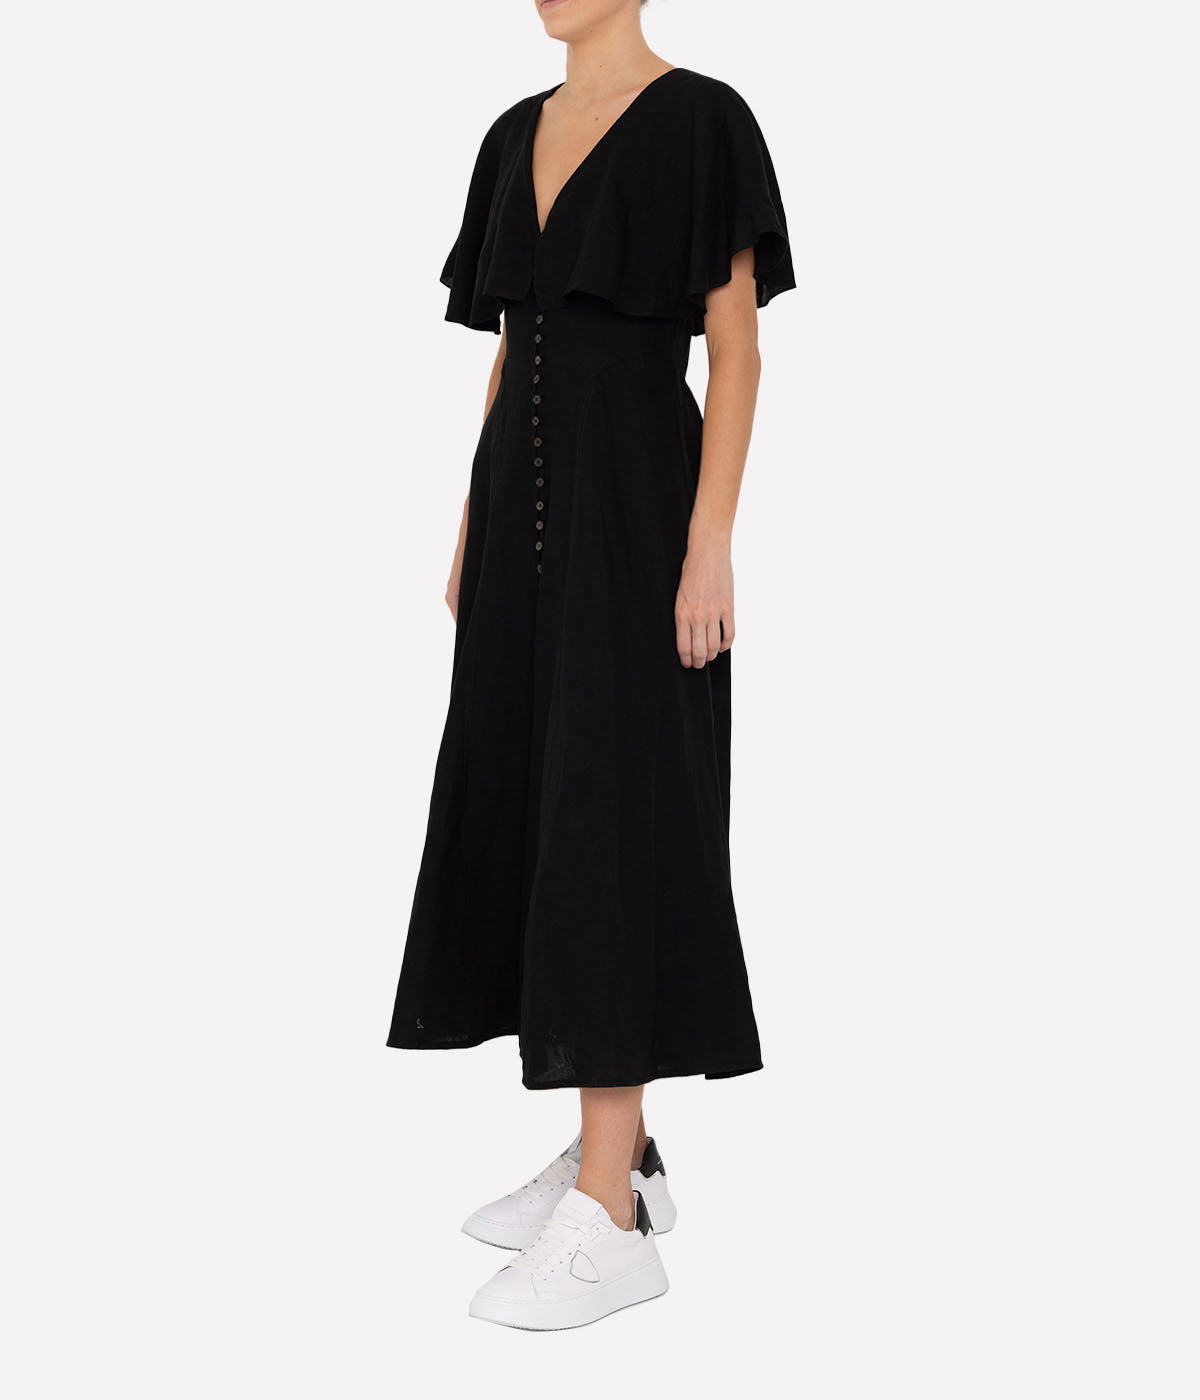 Delphine Dress in Black